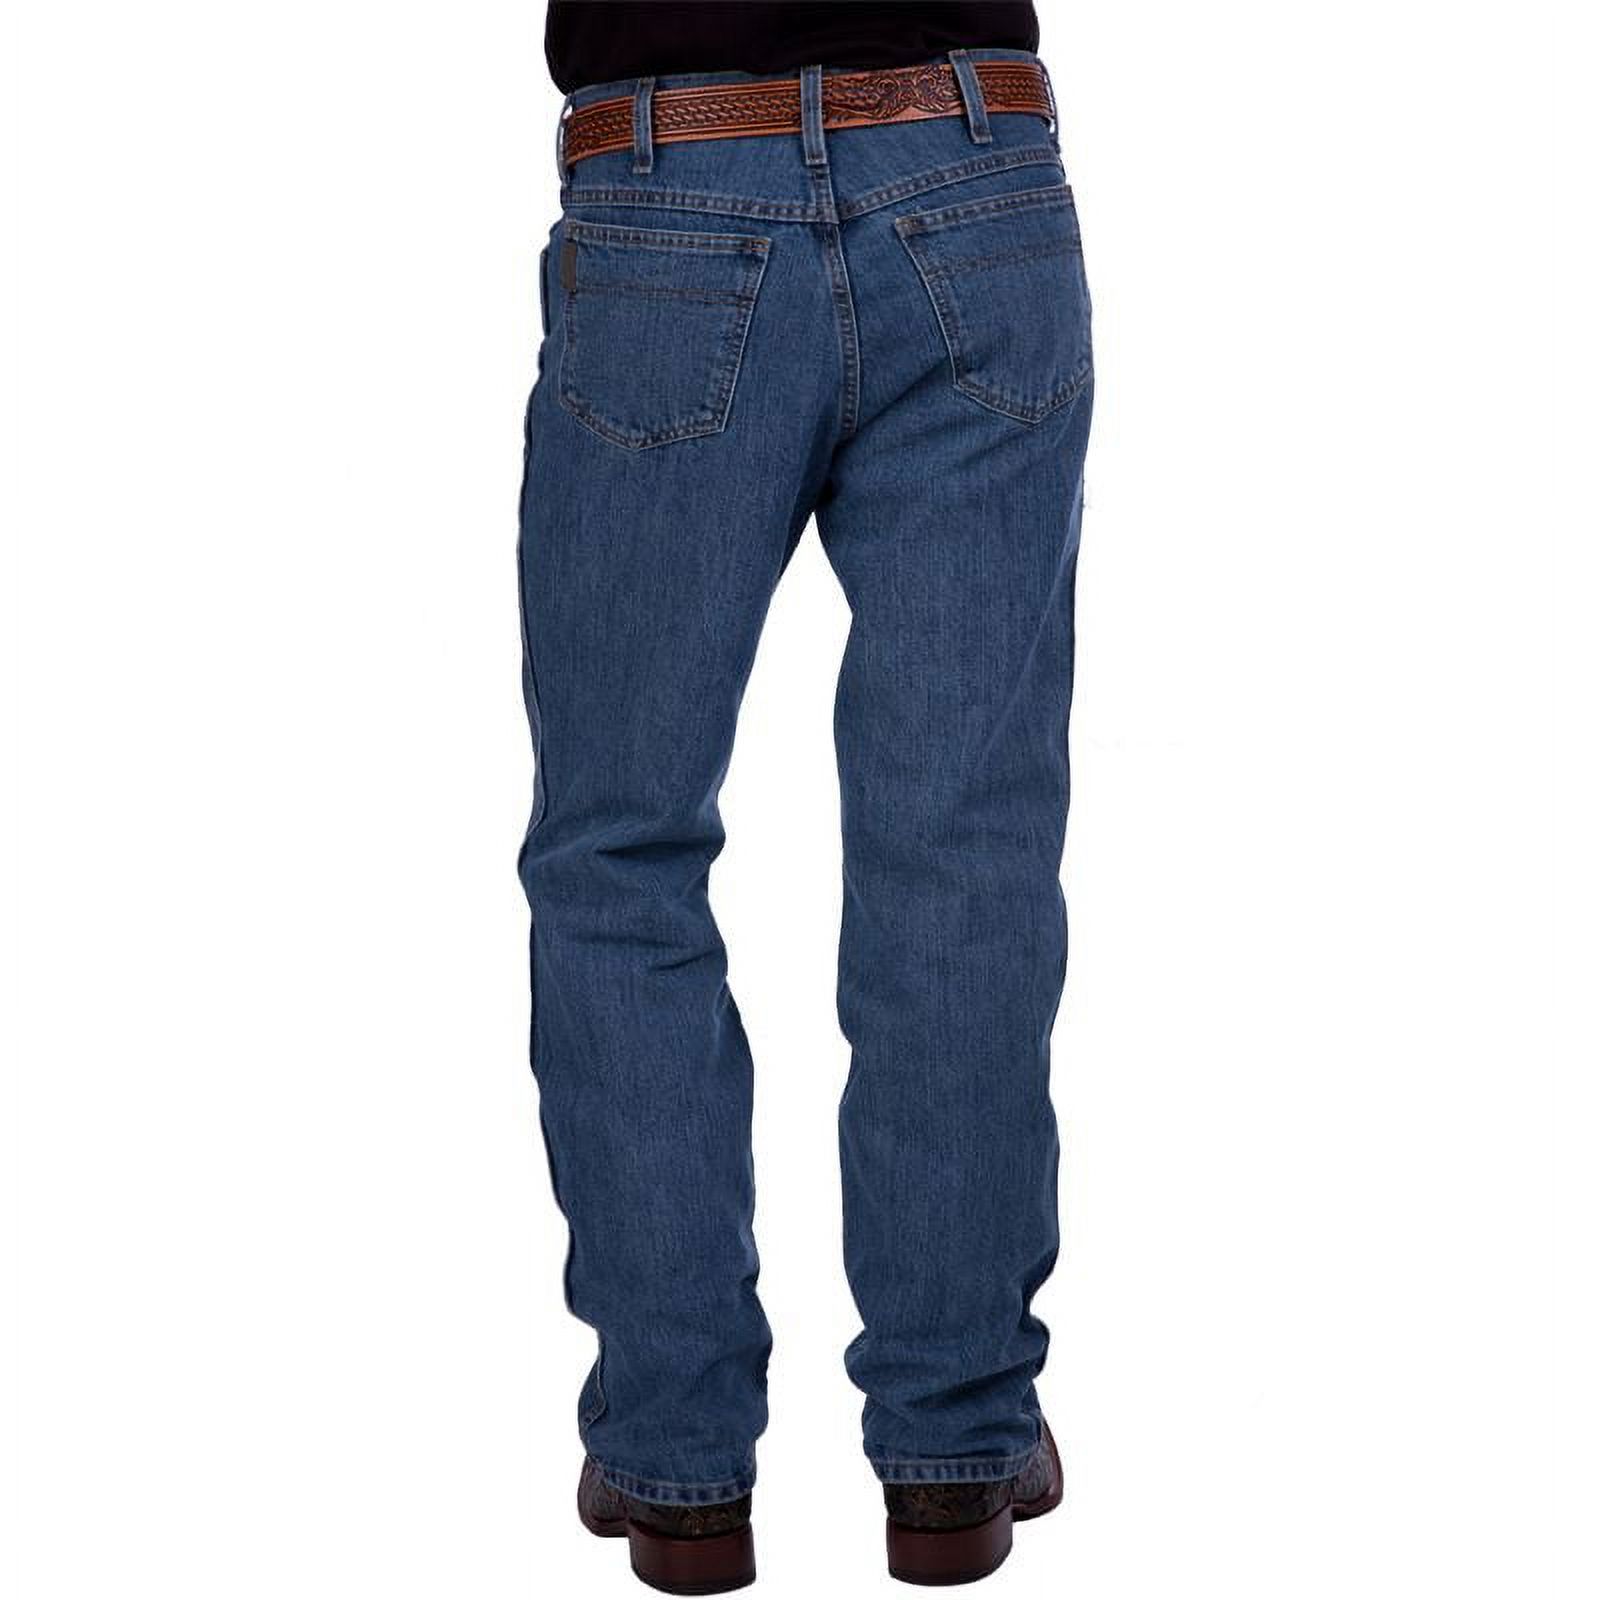 Cinch Men`s Bronze Label Jeans Medium Stonewash - image 1 of 3